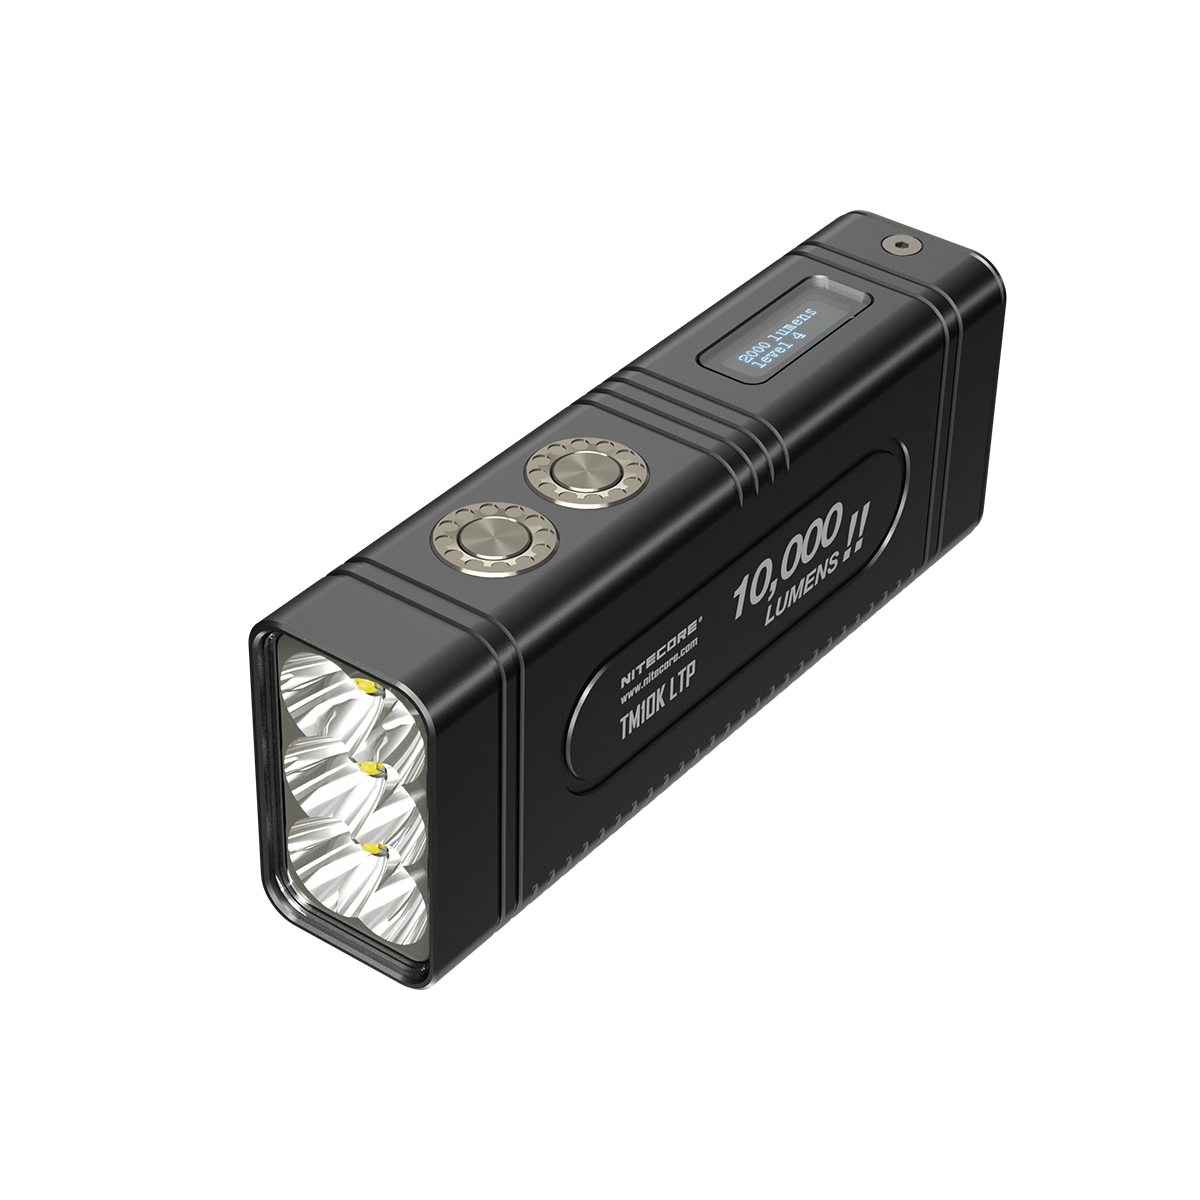 Nitecore TM10K LTP 6 x  XHP35 HD 10000 Lumens Rechargeable Flashlight